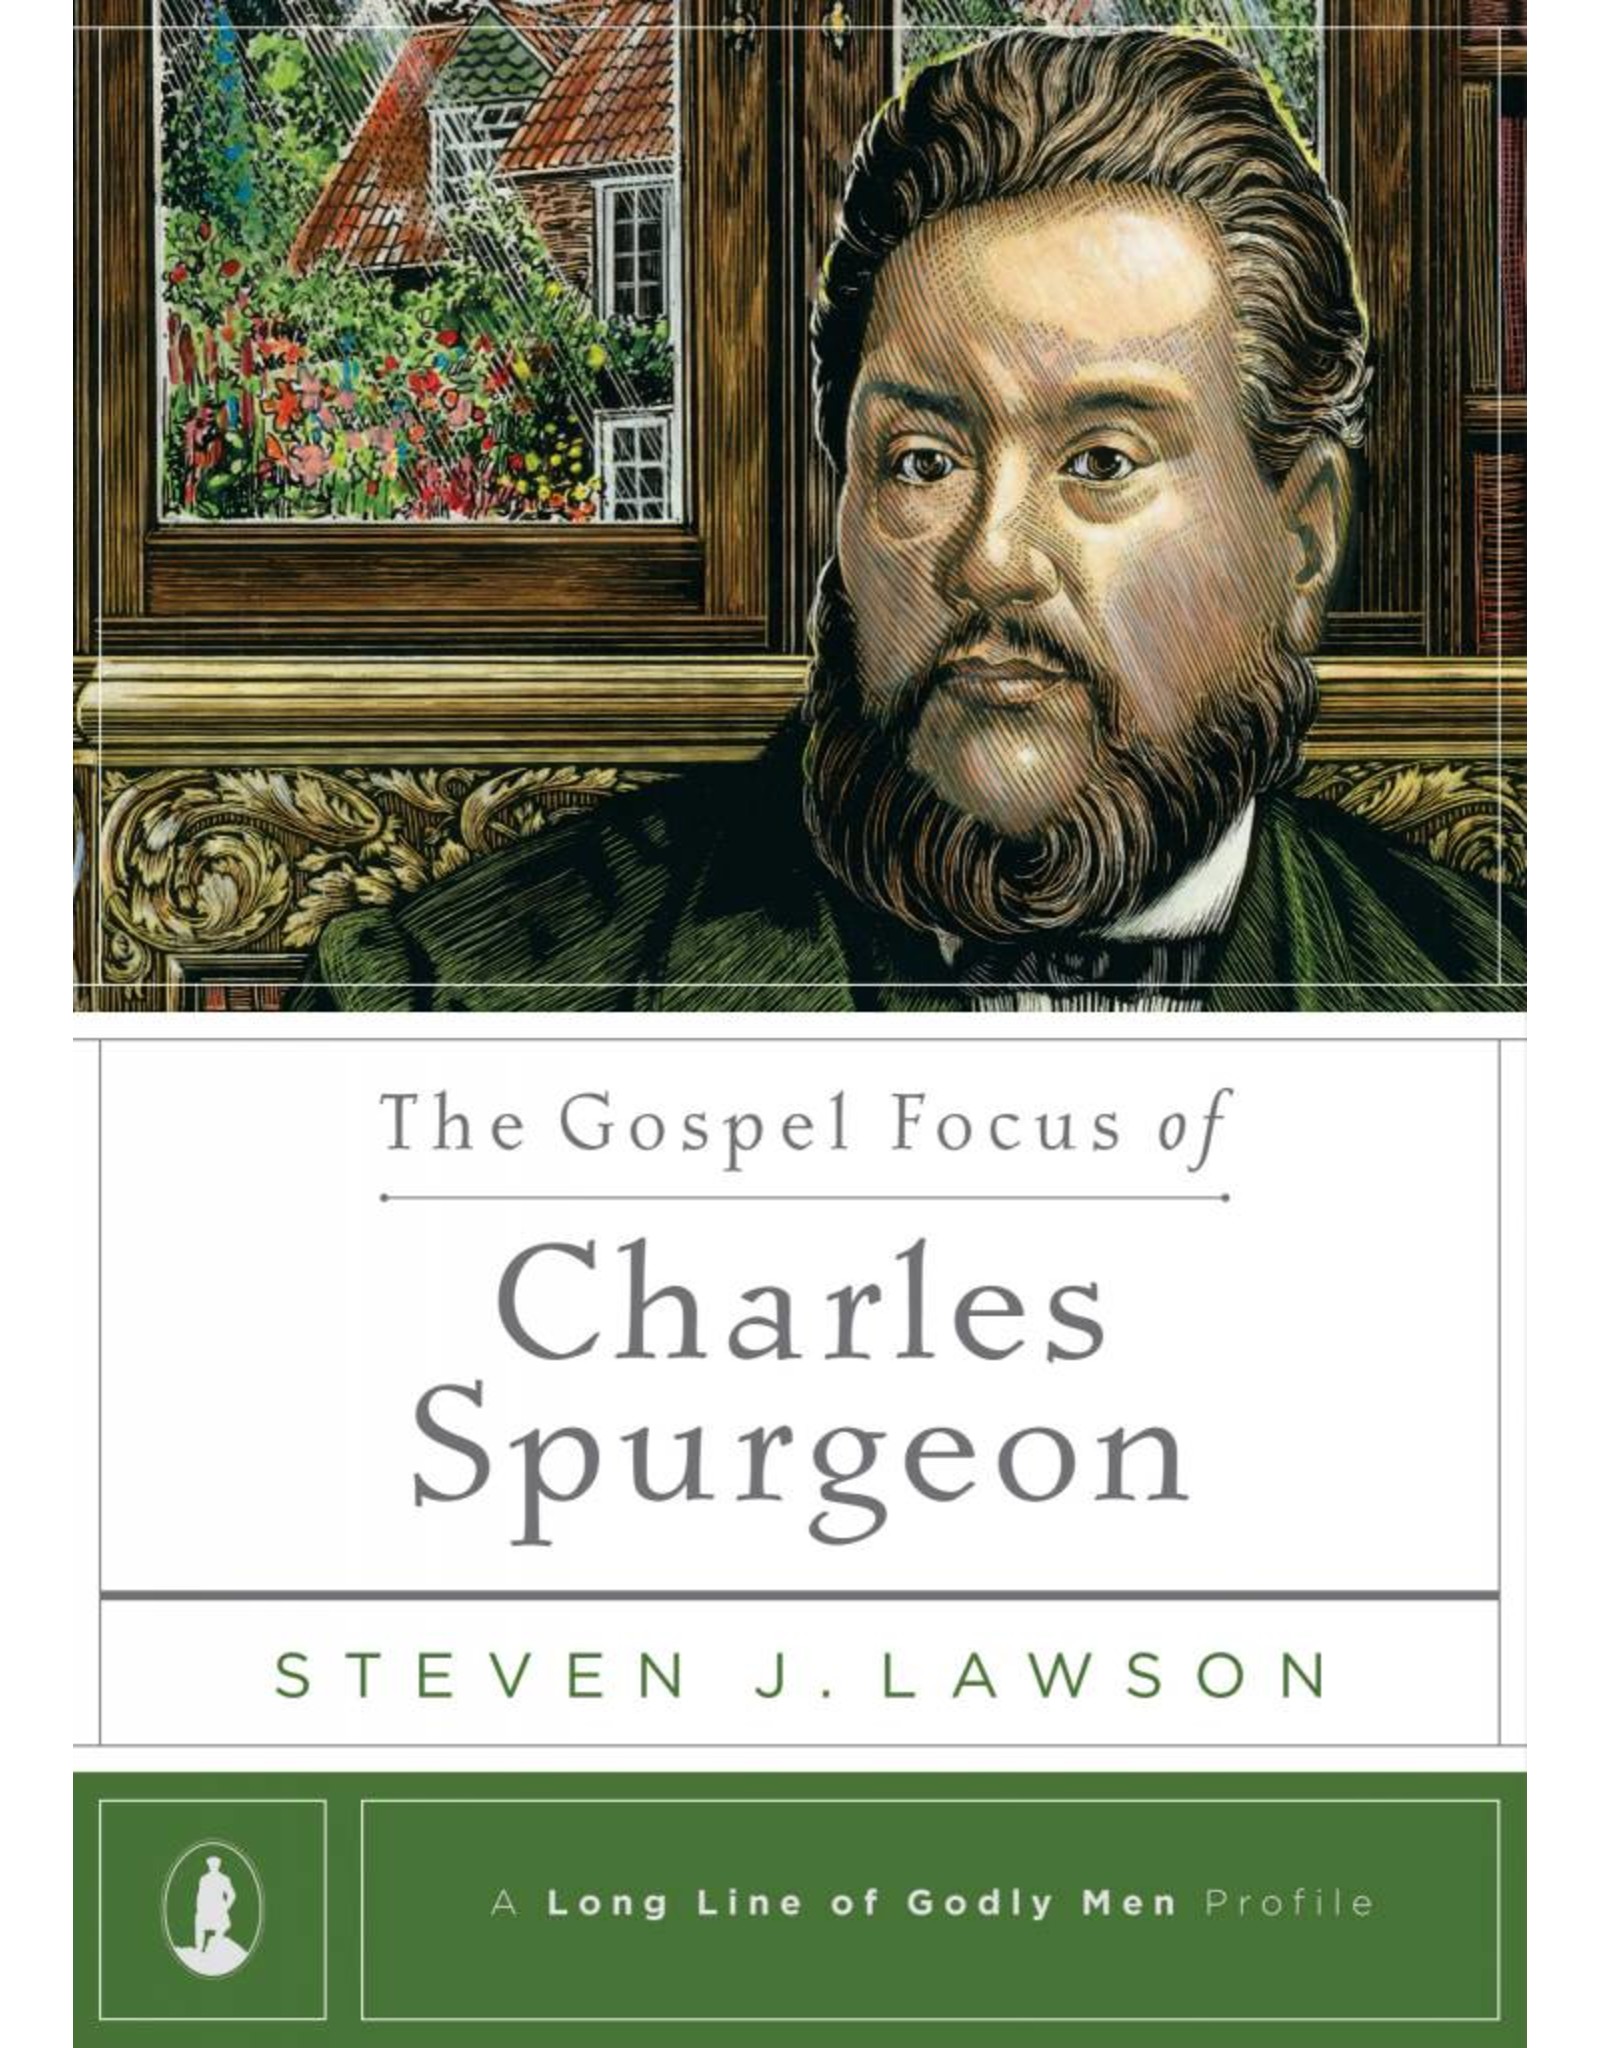 Ligonier / Reformation Trust The Gospel Focus of Charles Spurgeon